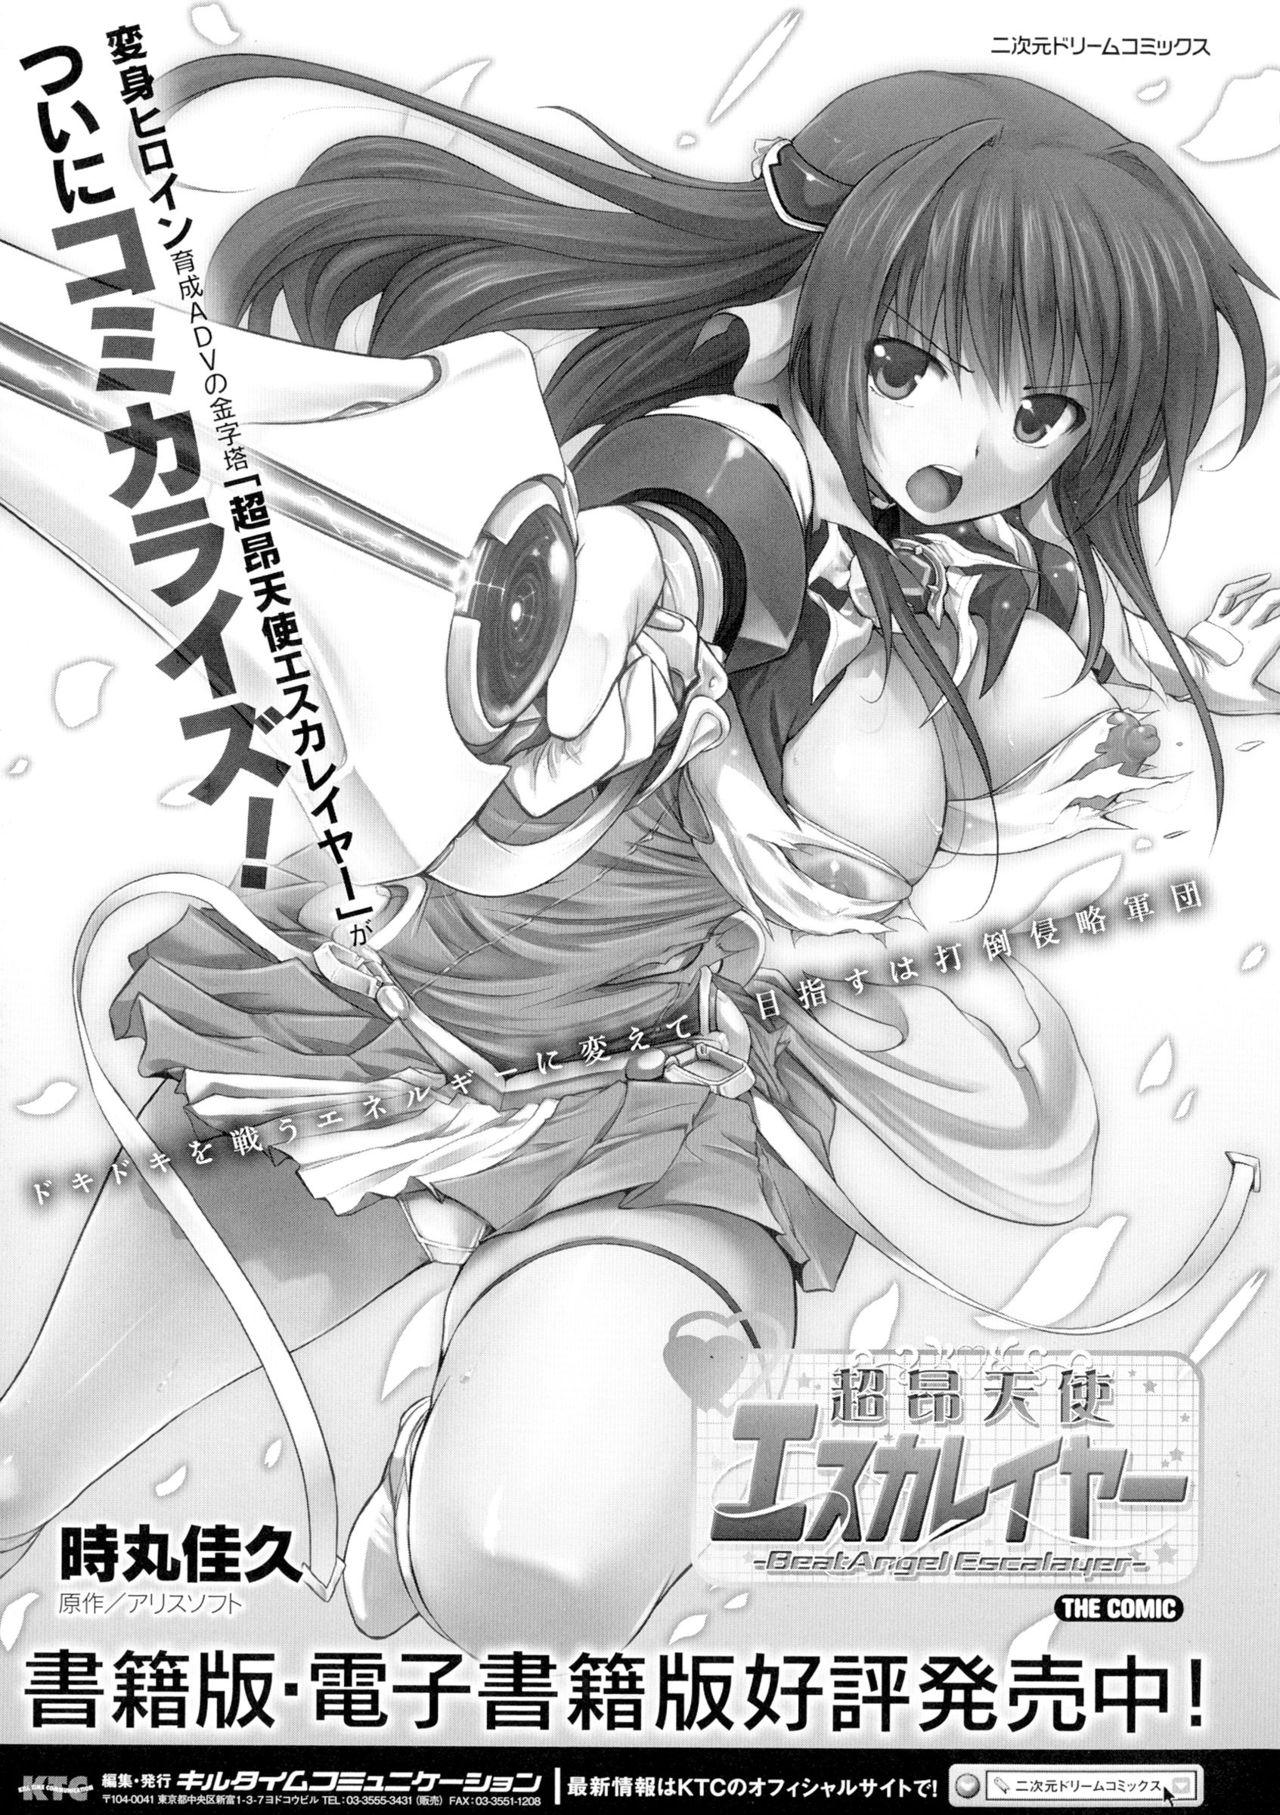 Seigi no Heroine Kangoku File DX Vol. 1 230